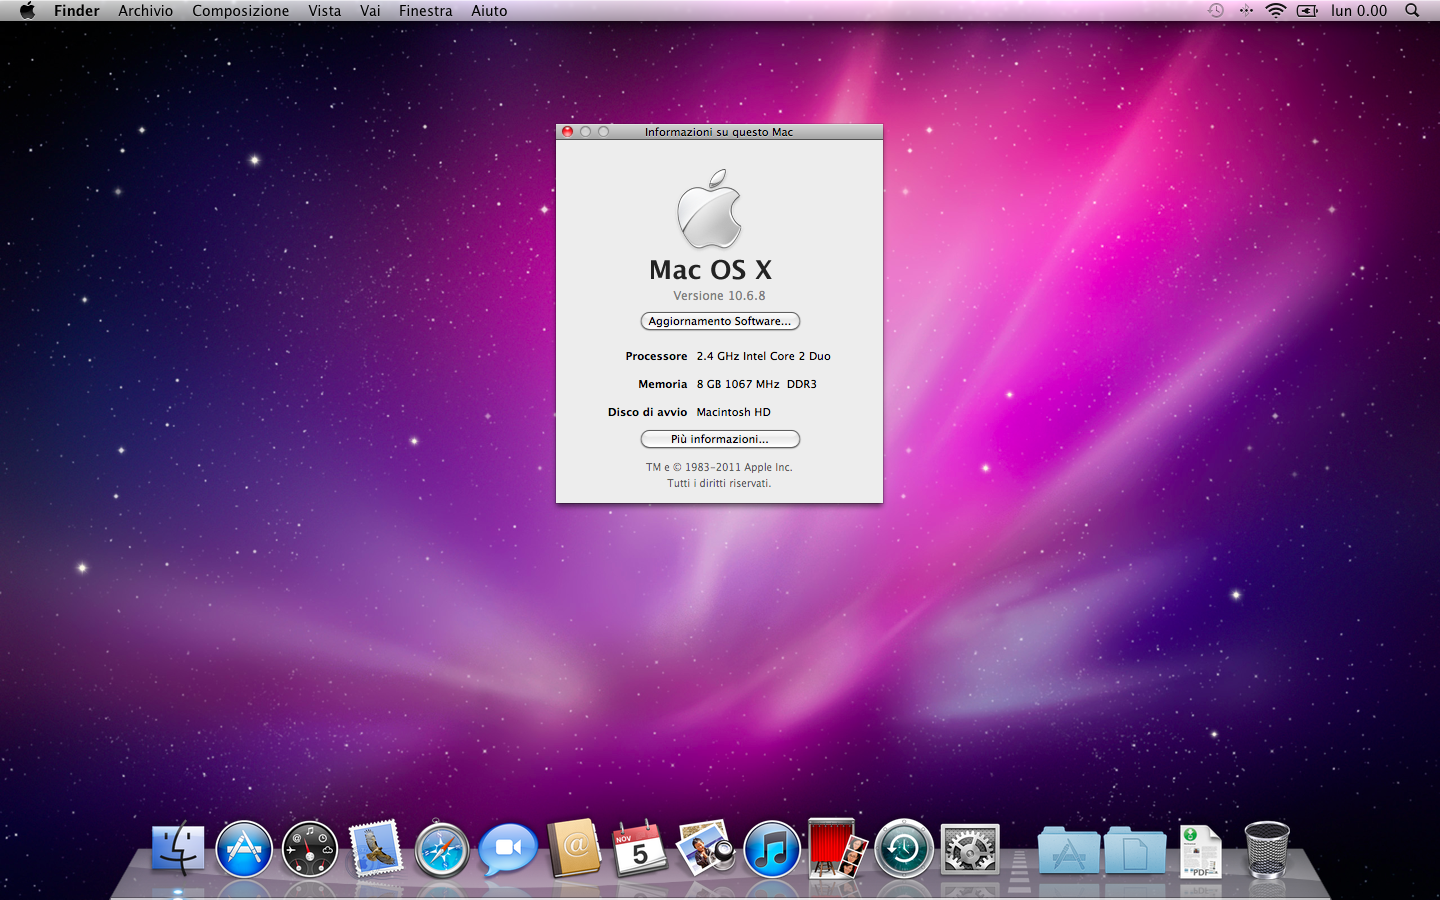 Download Imovie Mac Os X 10.6.3